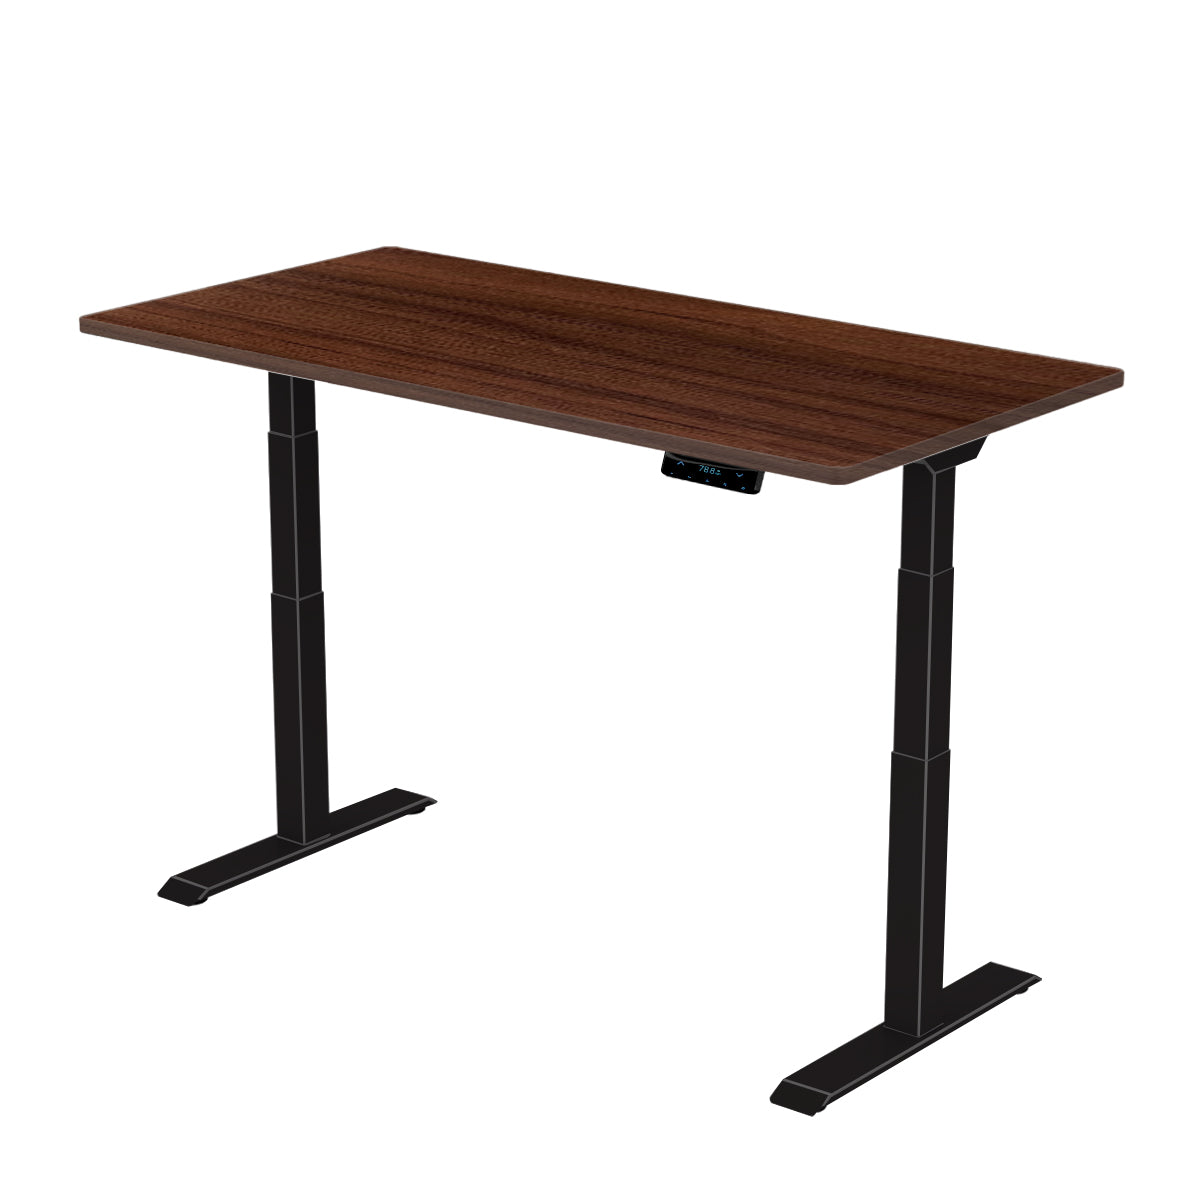 (READY STOCKS) Ergoworks Miniature Standing Desk, MFC Tabletop